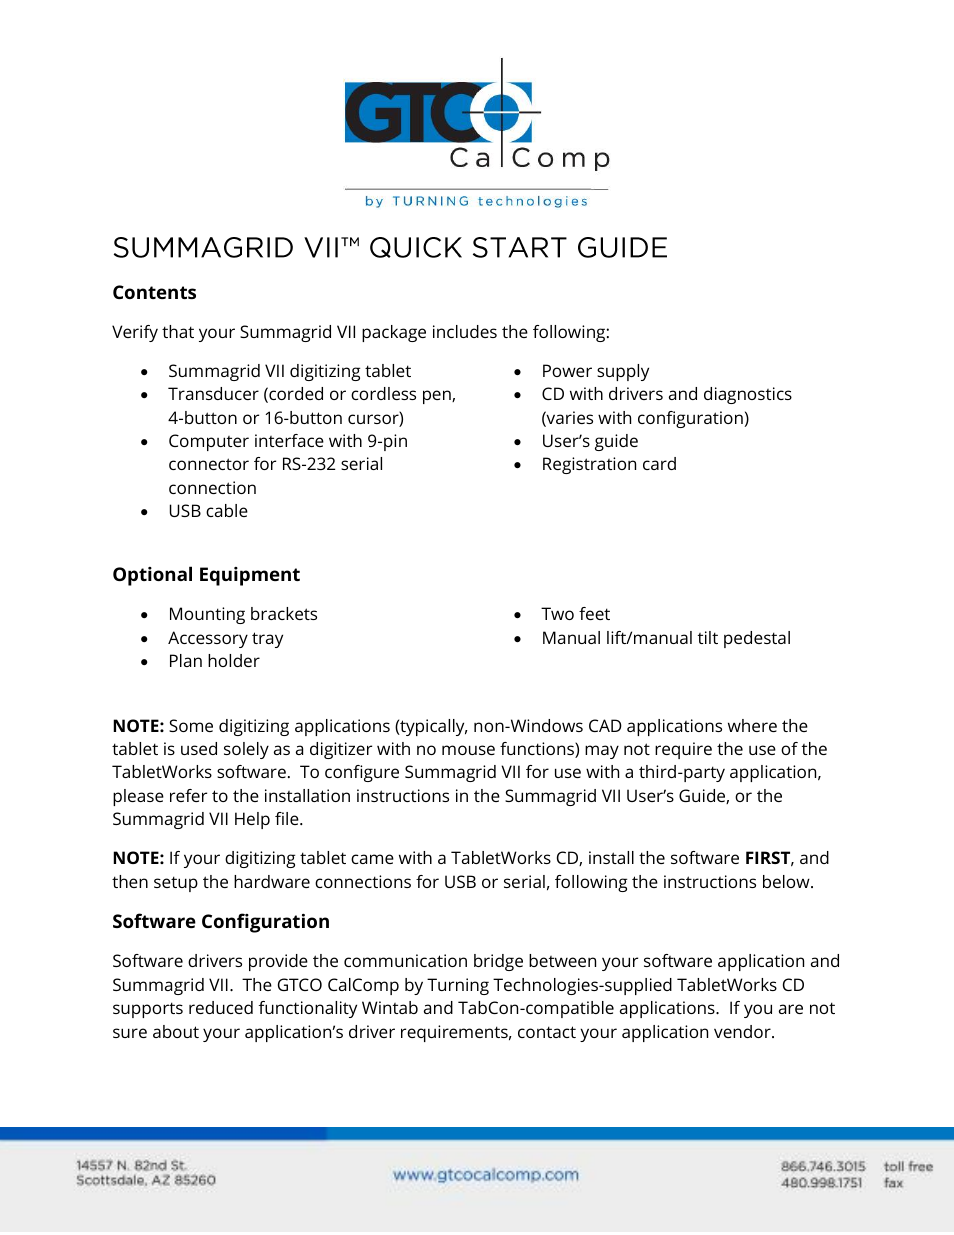 Summagrid VII - Quick Start Guide